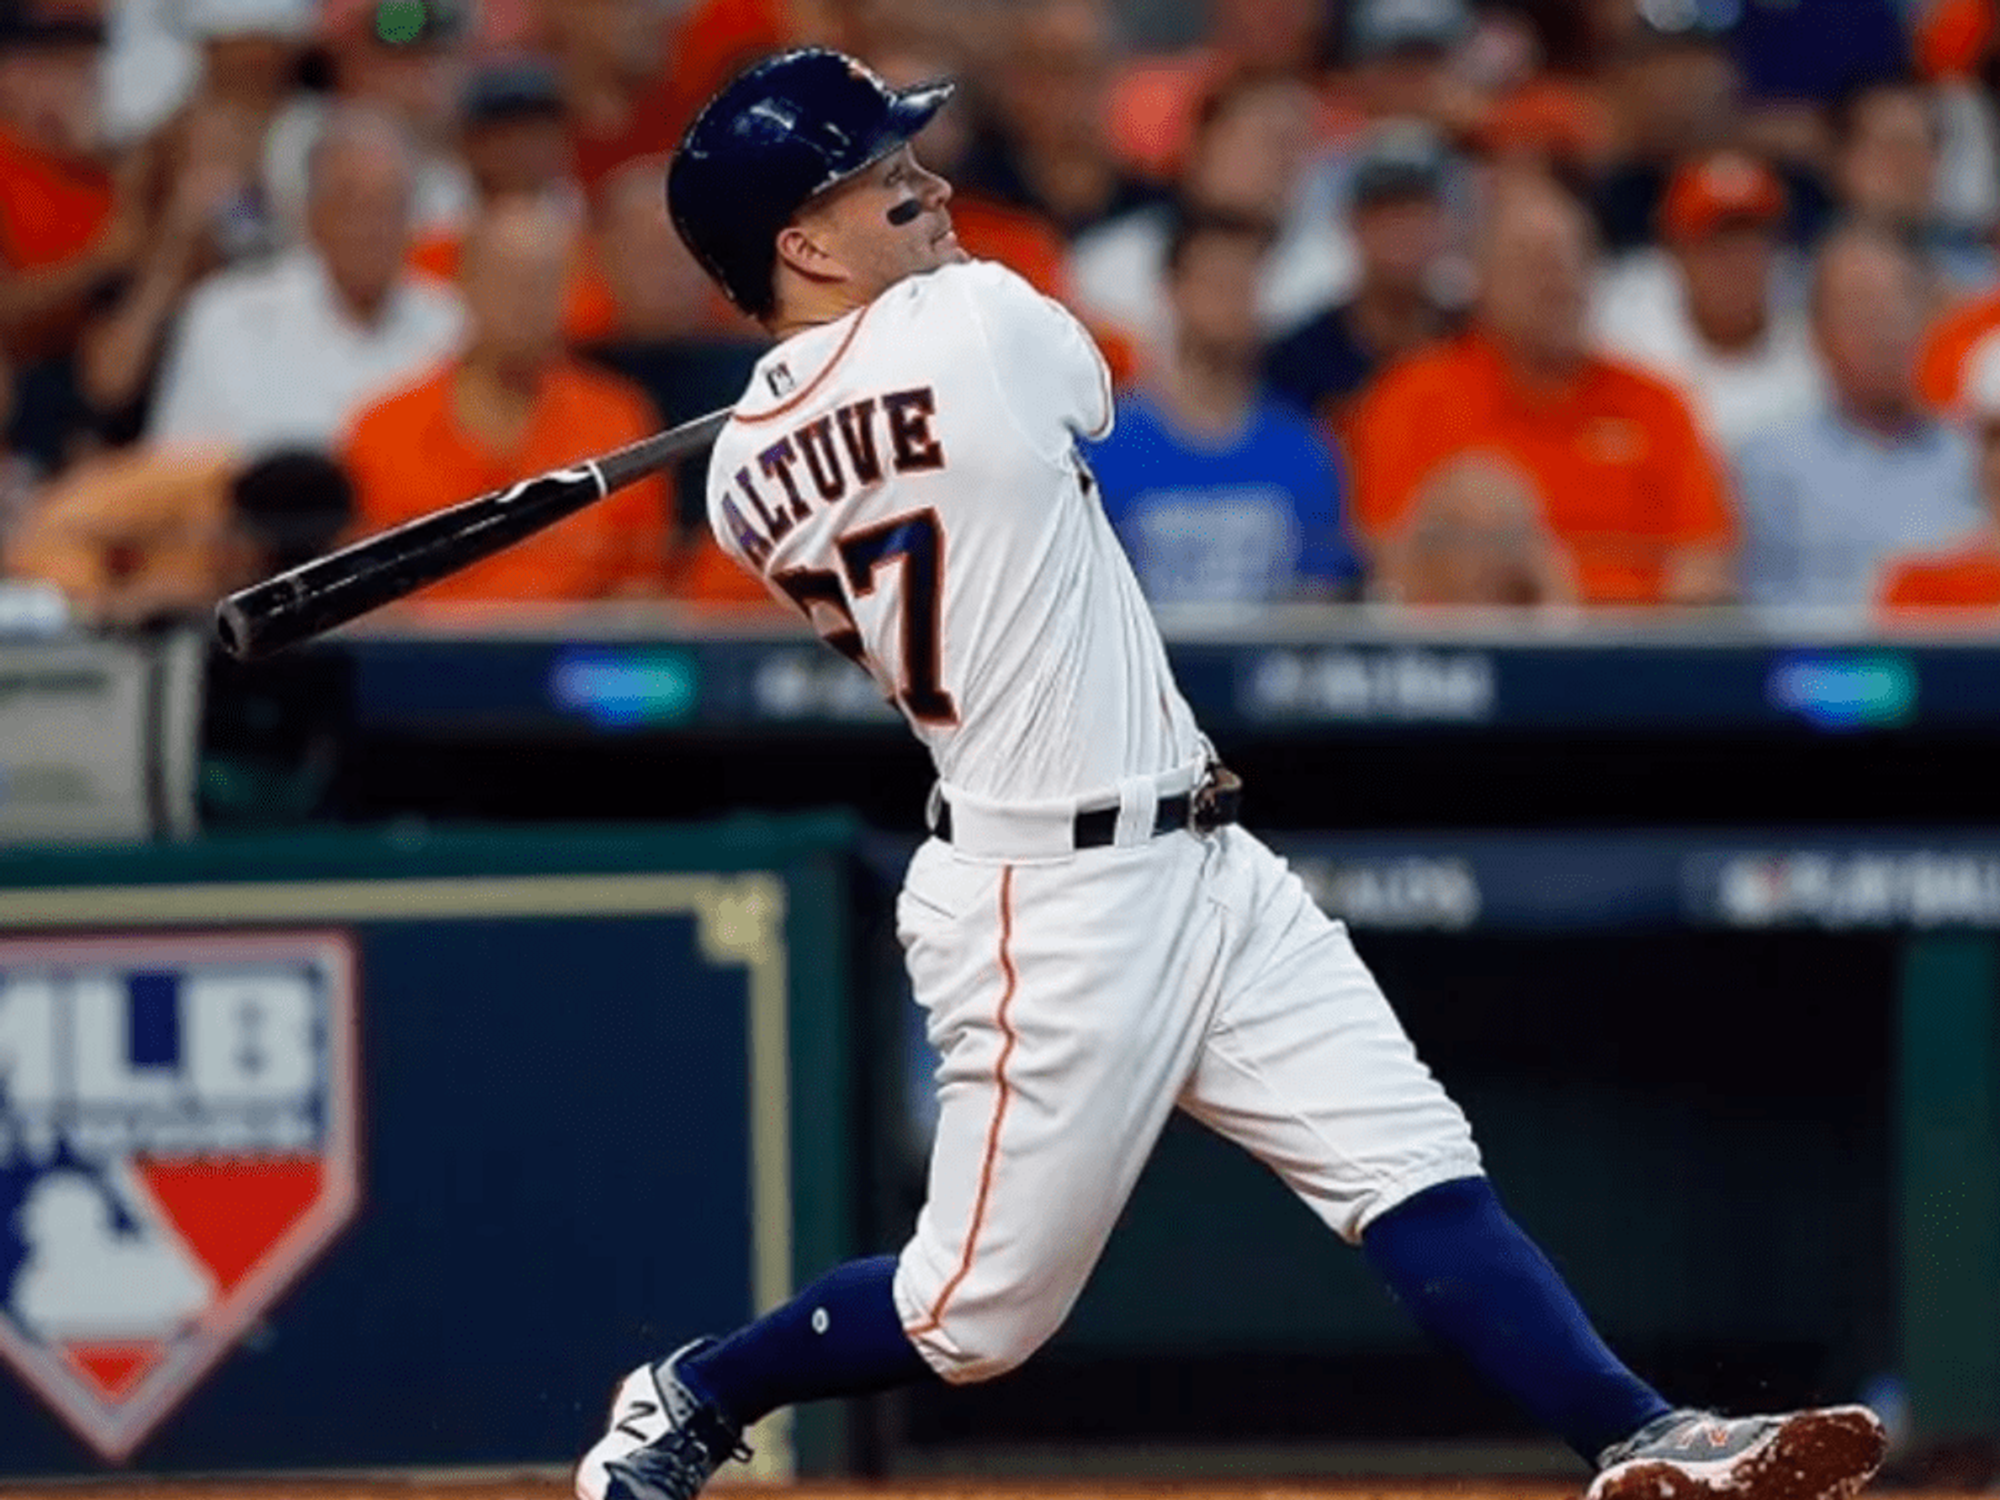 Oswalt hurls Astros into World Series